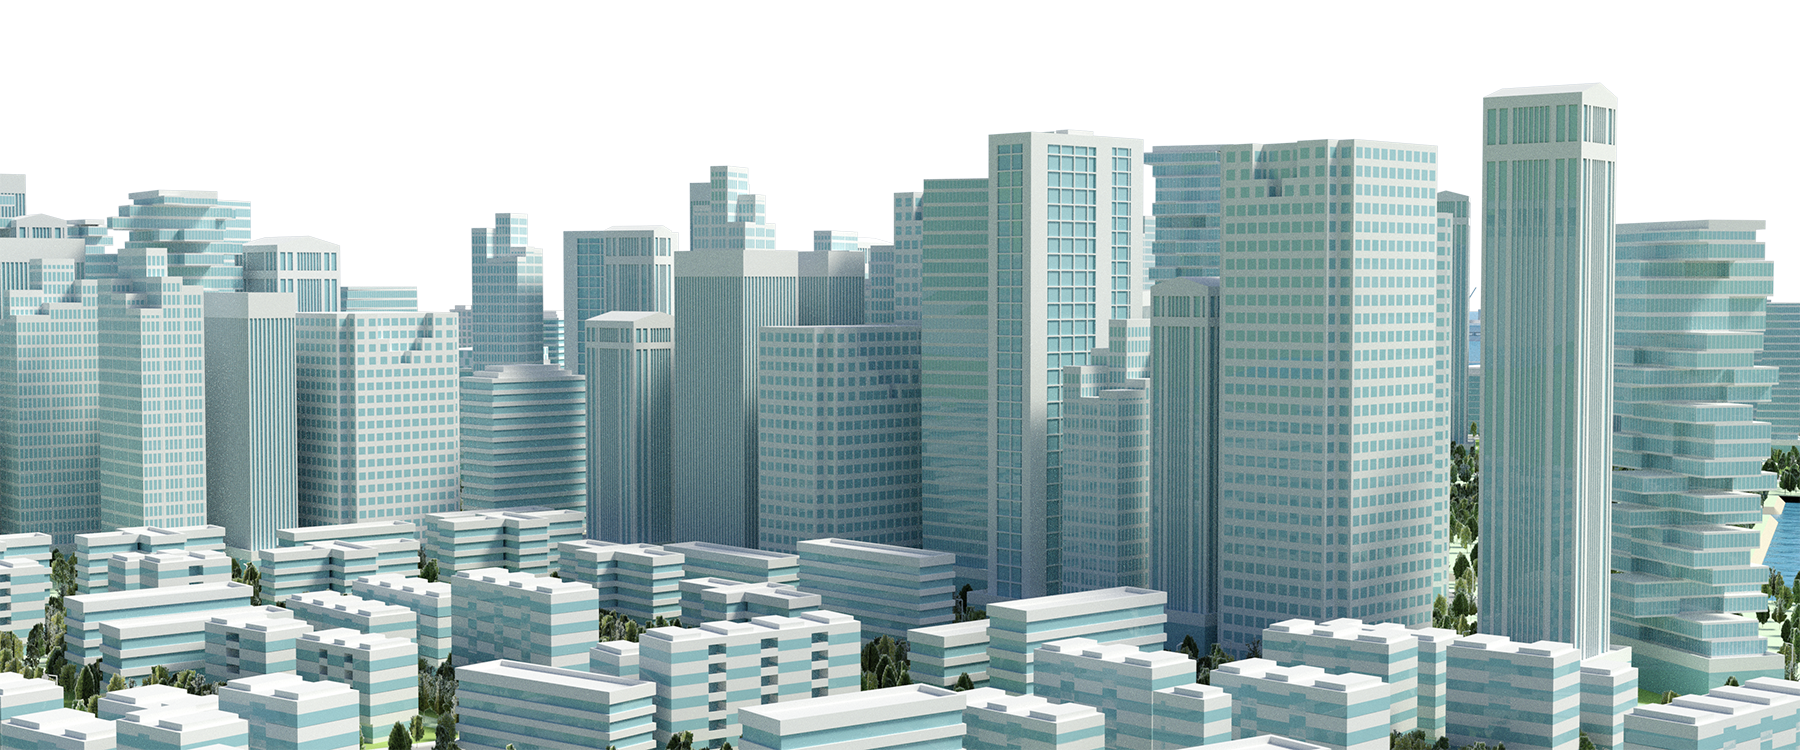 Download PNG image - City Building PNG Transparent Image 